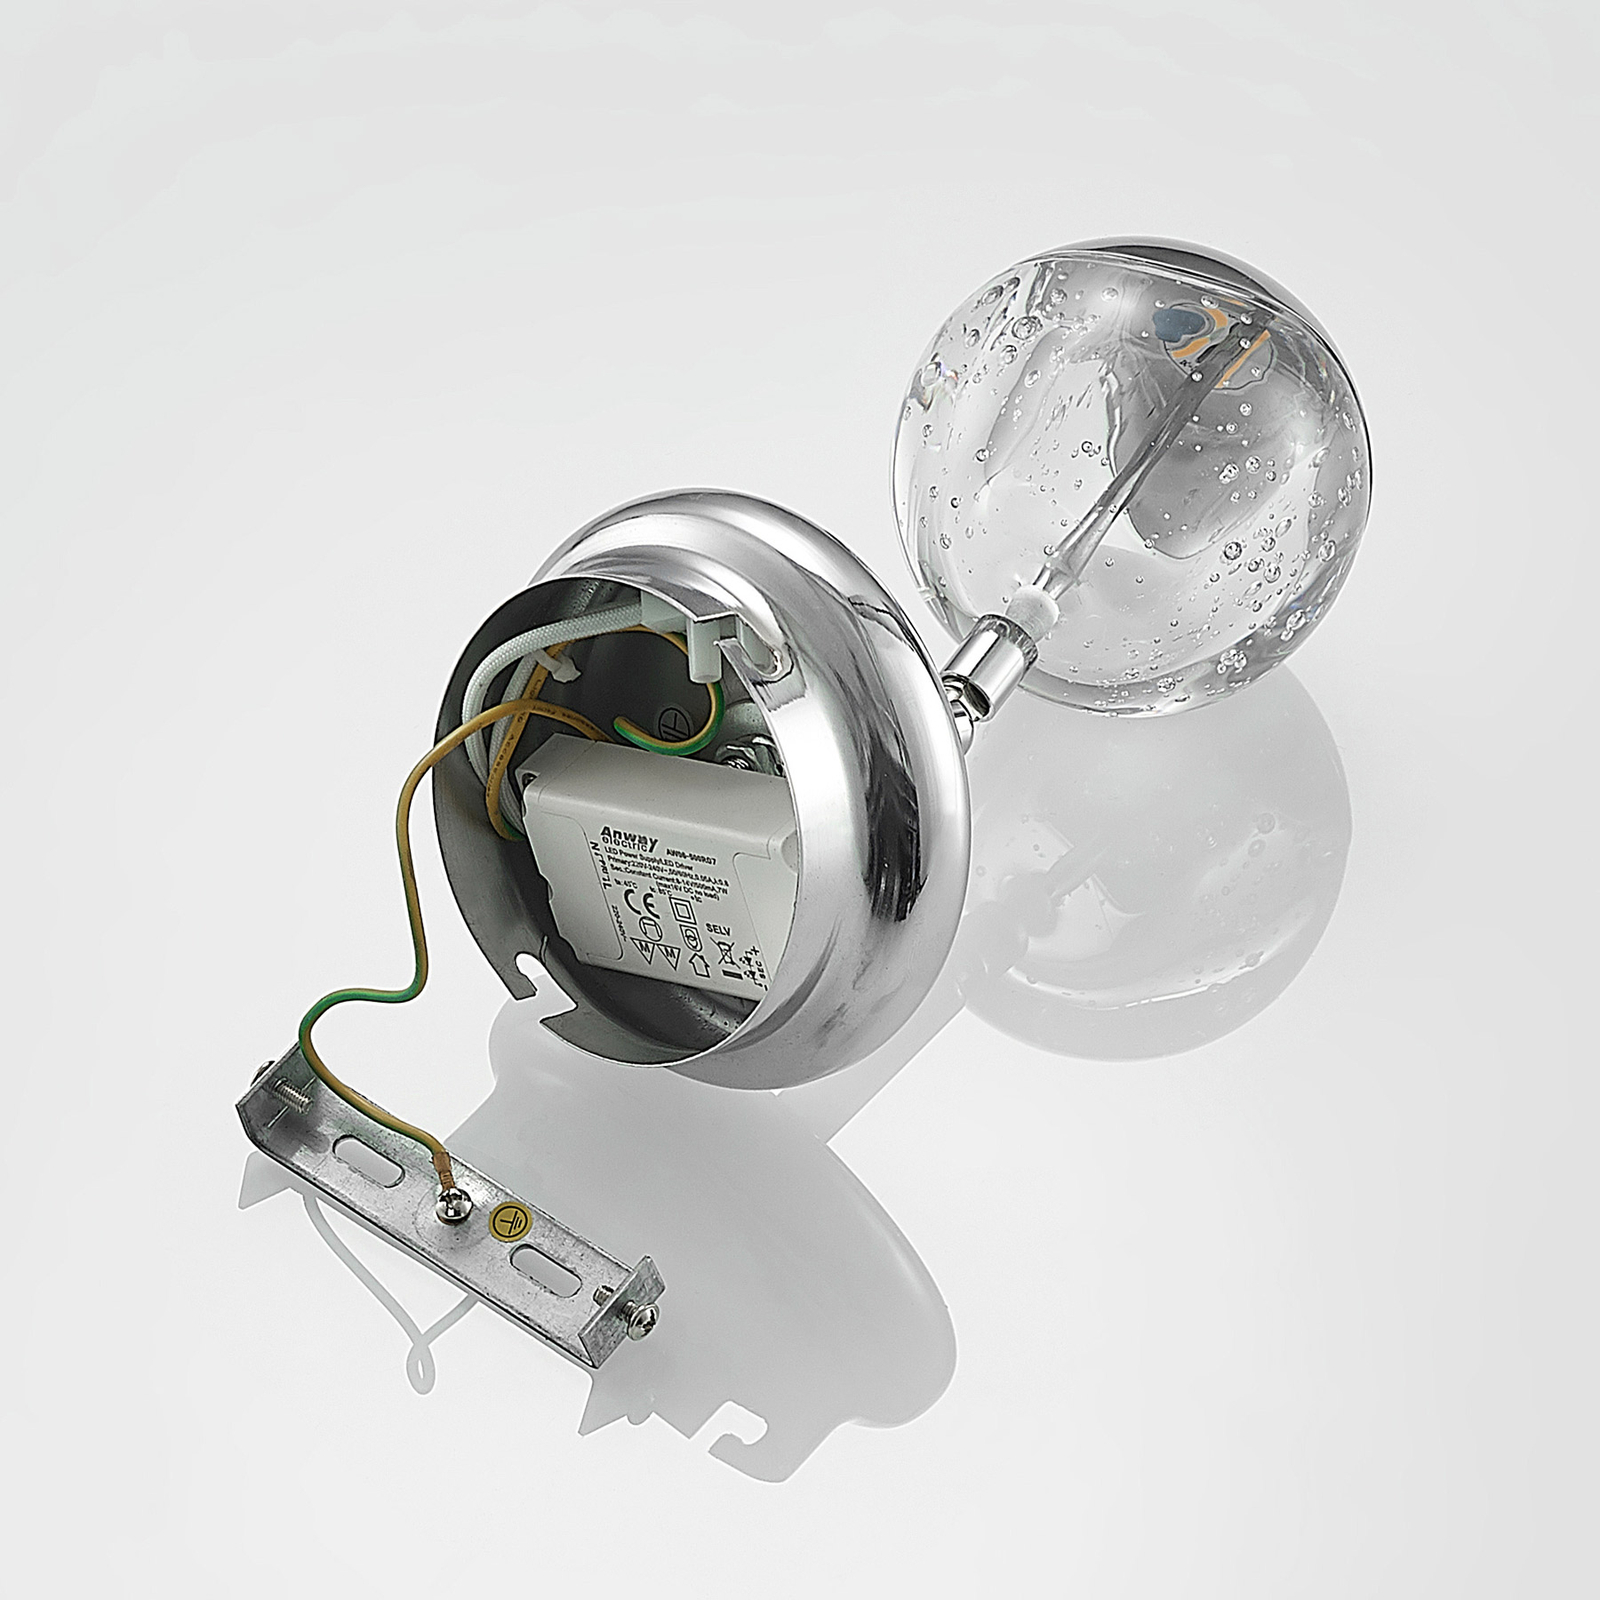 Lucande Kilio LED spotlight glass lampshade chrome